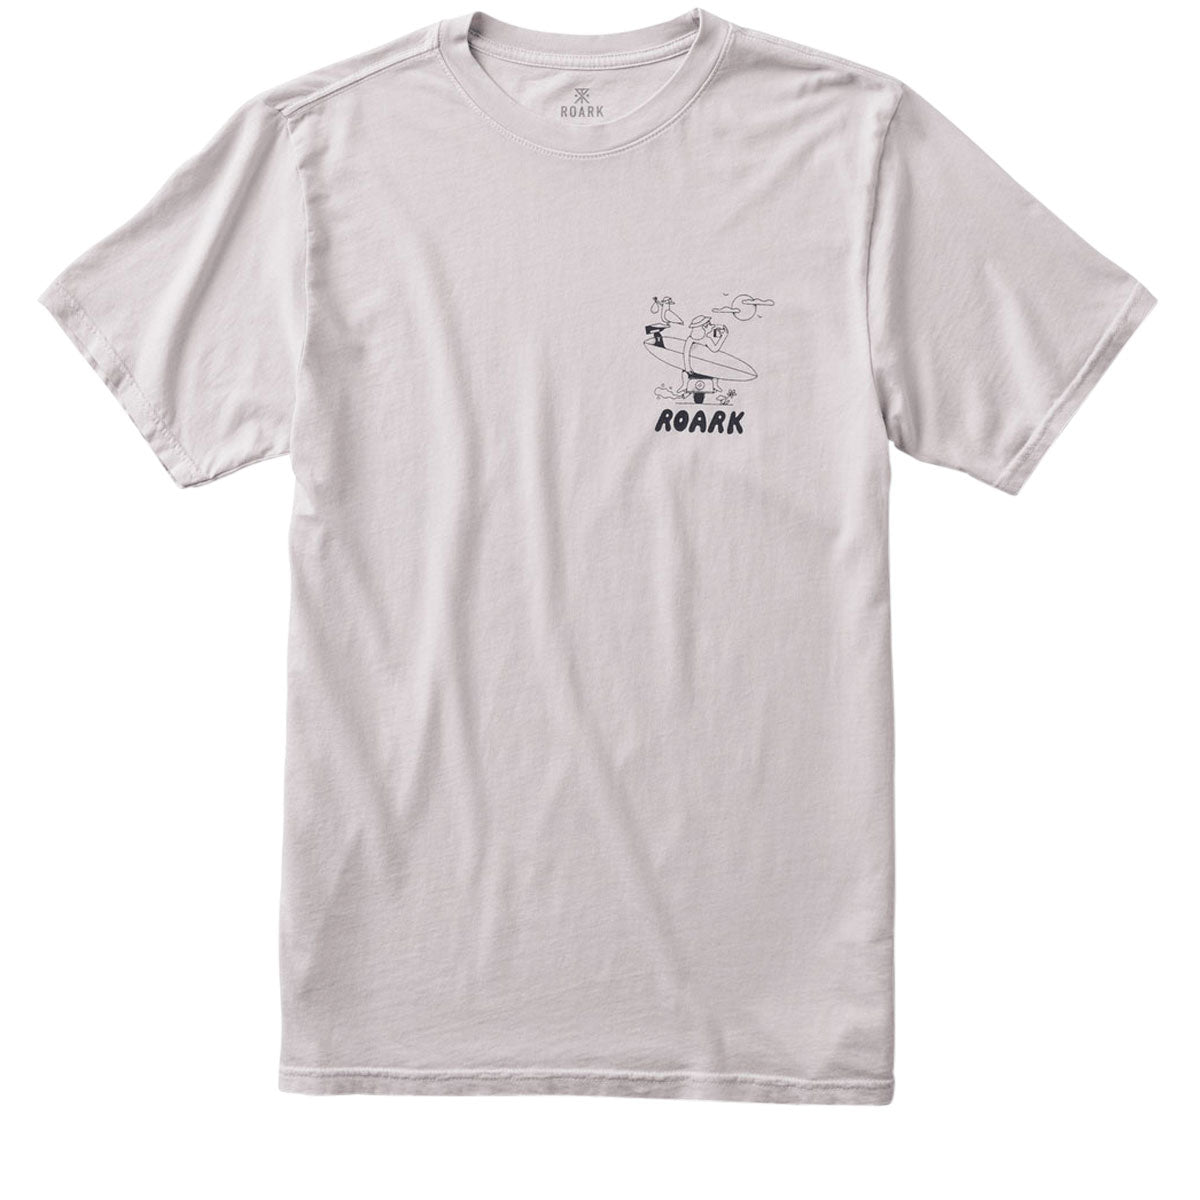 Roark Roadtrip Club T-Shirt - Dusty Lilac image 2